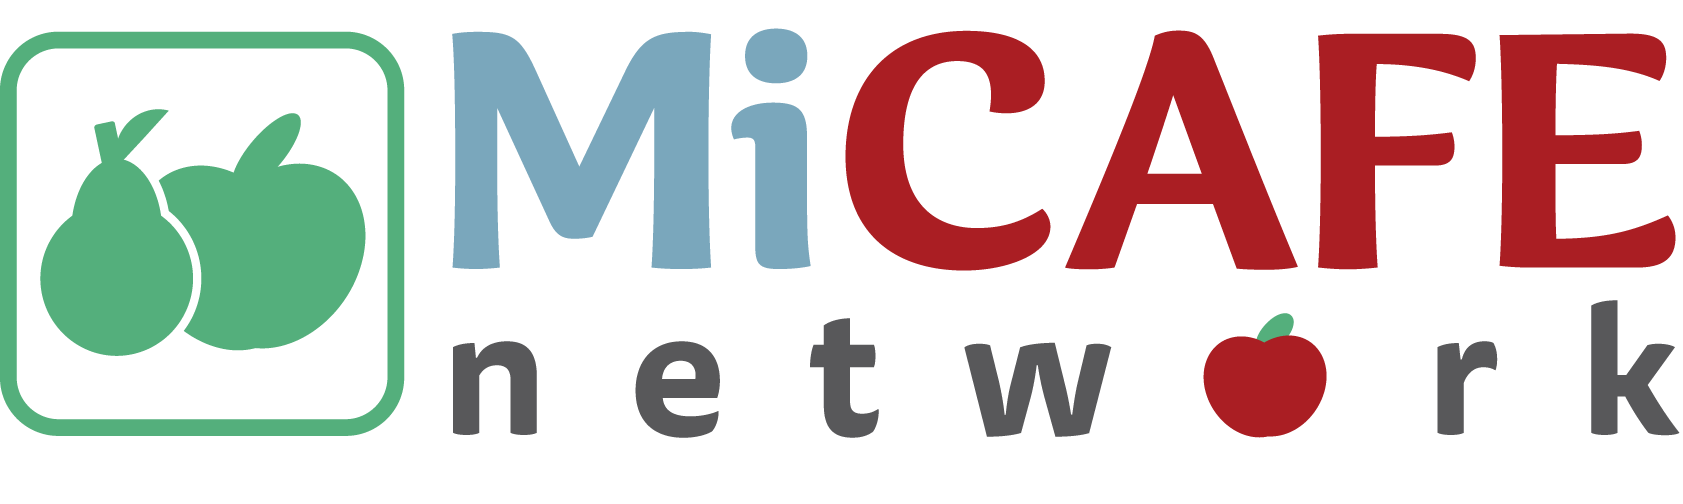 MiCAFE Network Logo